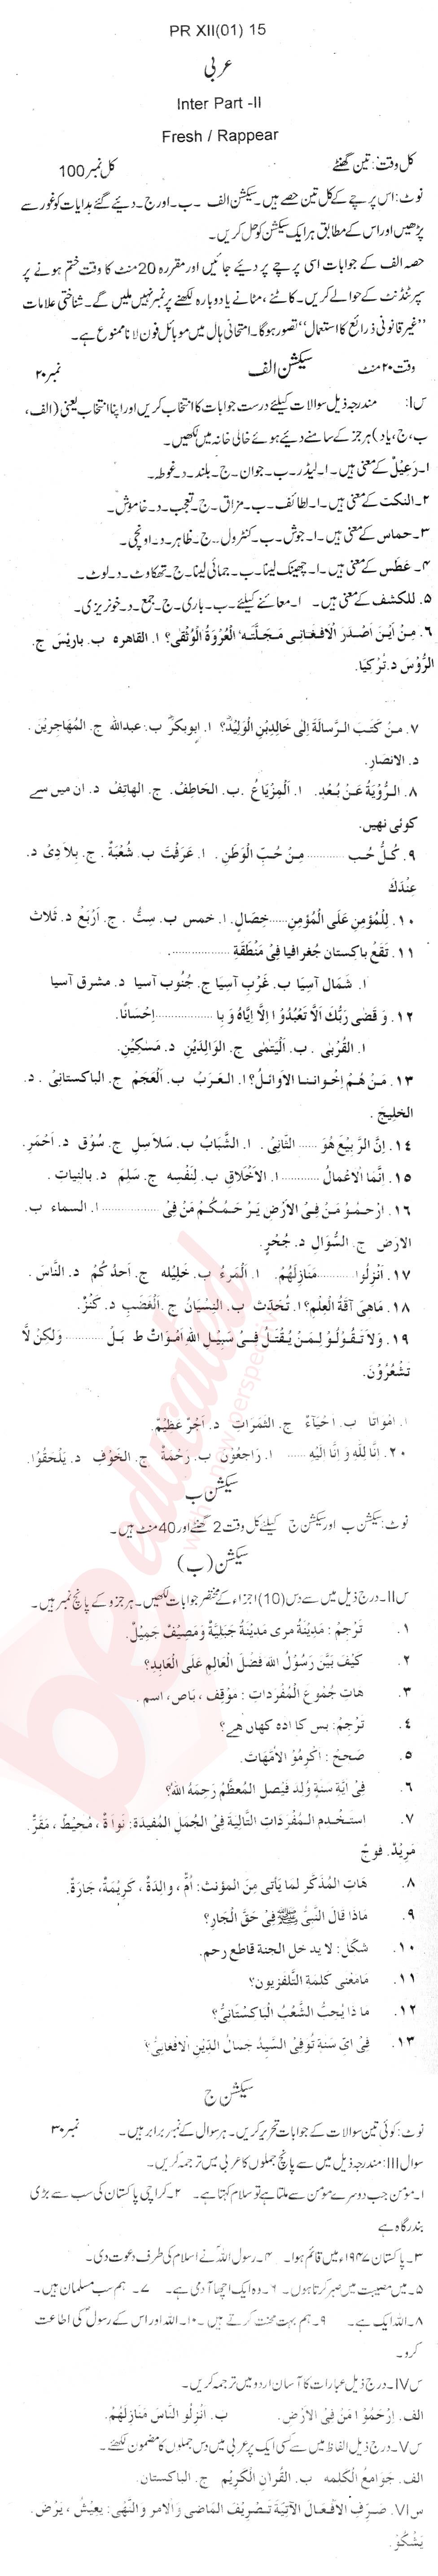 Arabic FA Part 2 Past Paper Group 1 BISE Kohat 2015